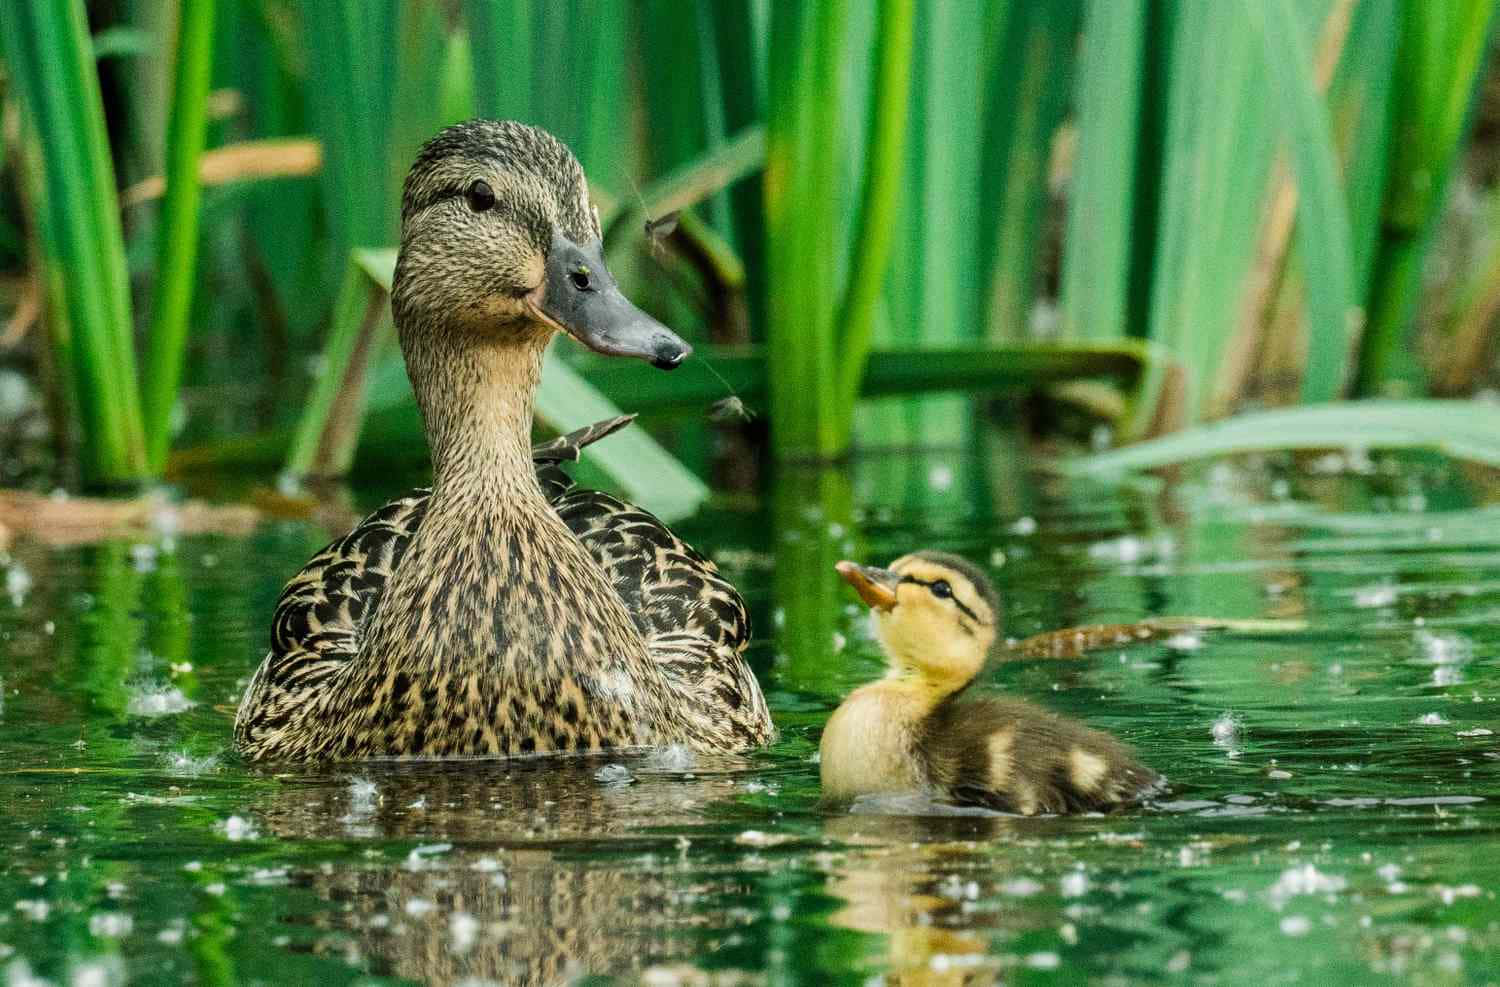 A beautiful duck enjoying an afternoon swim